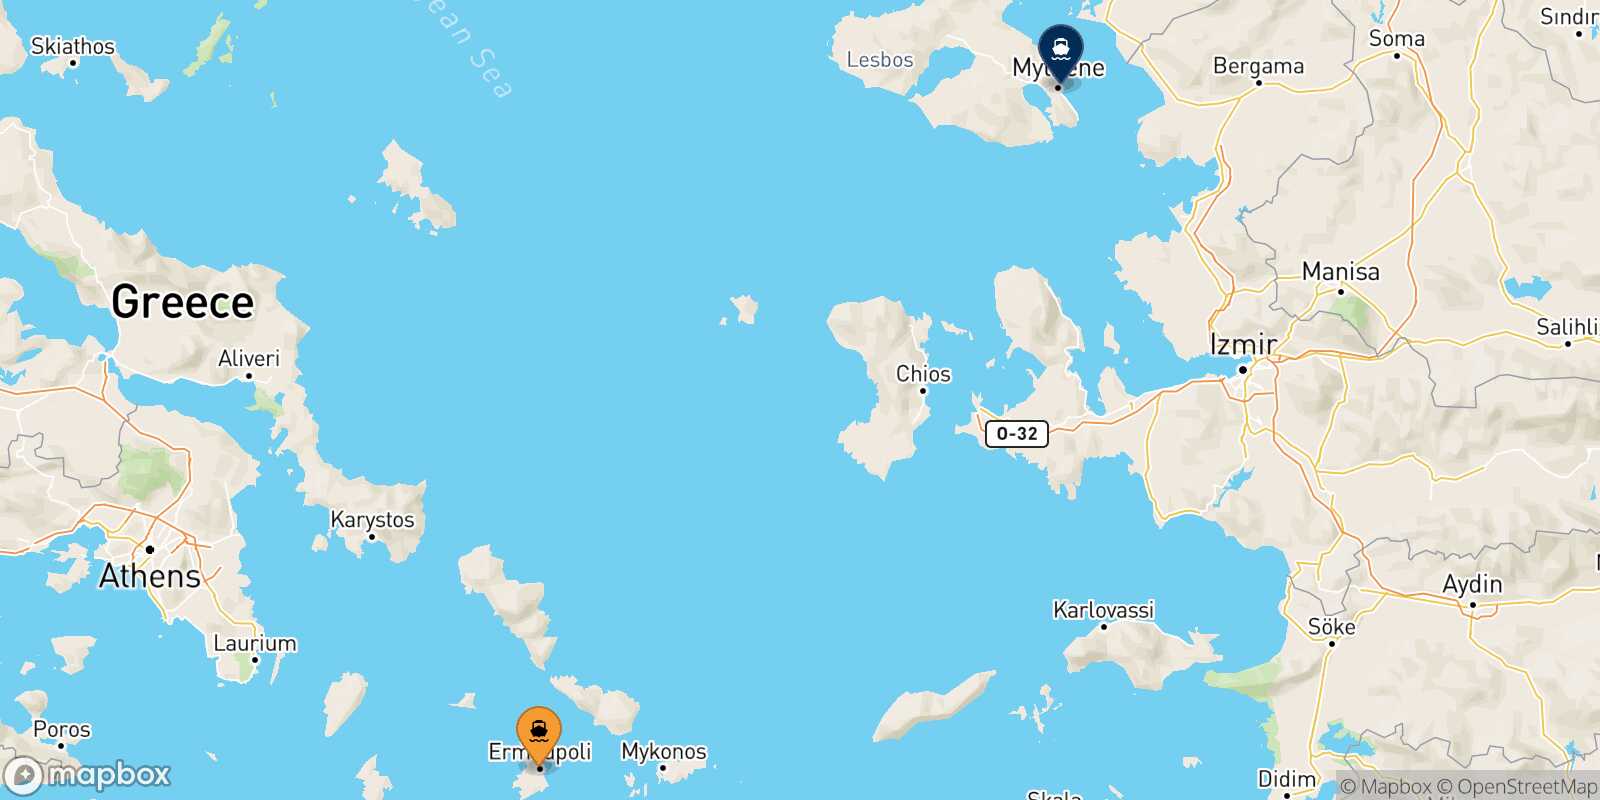 Syros Mytilene (Lesvos) route map